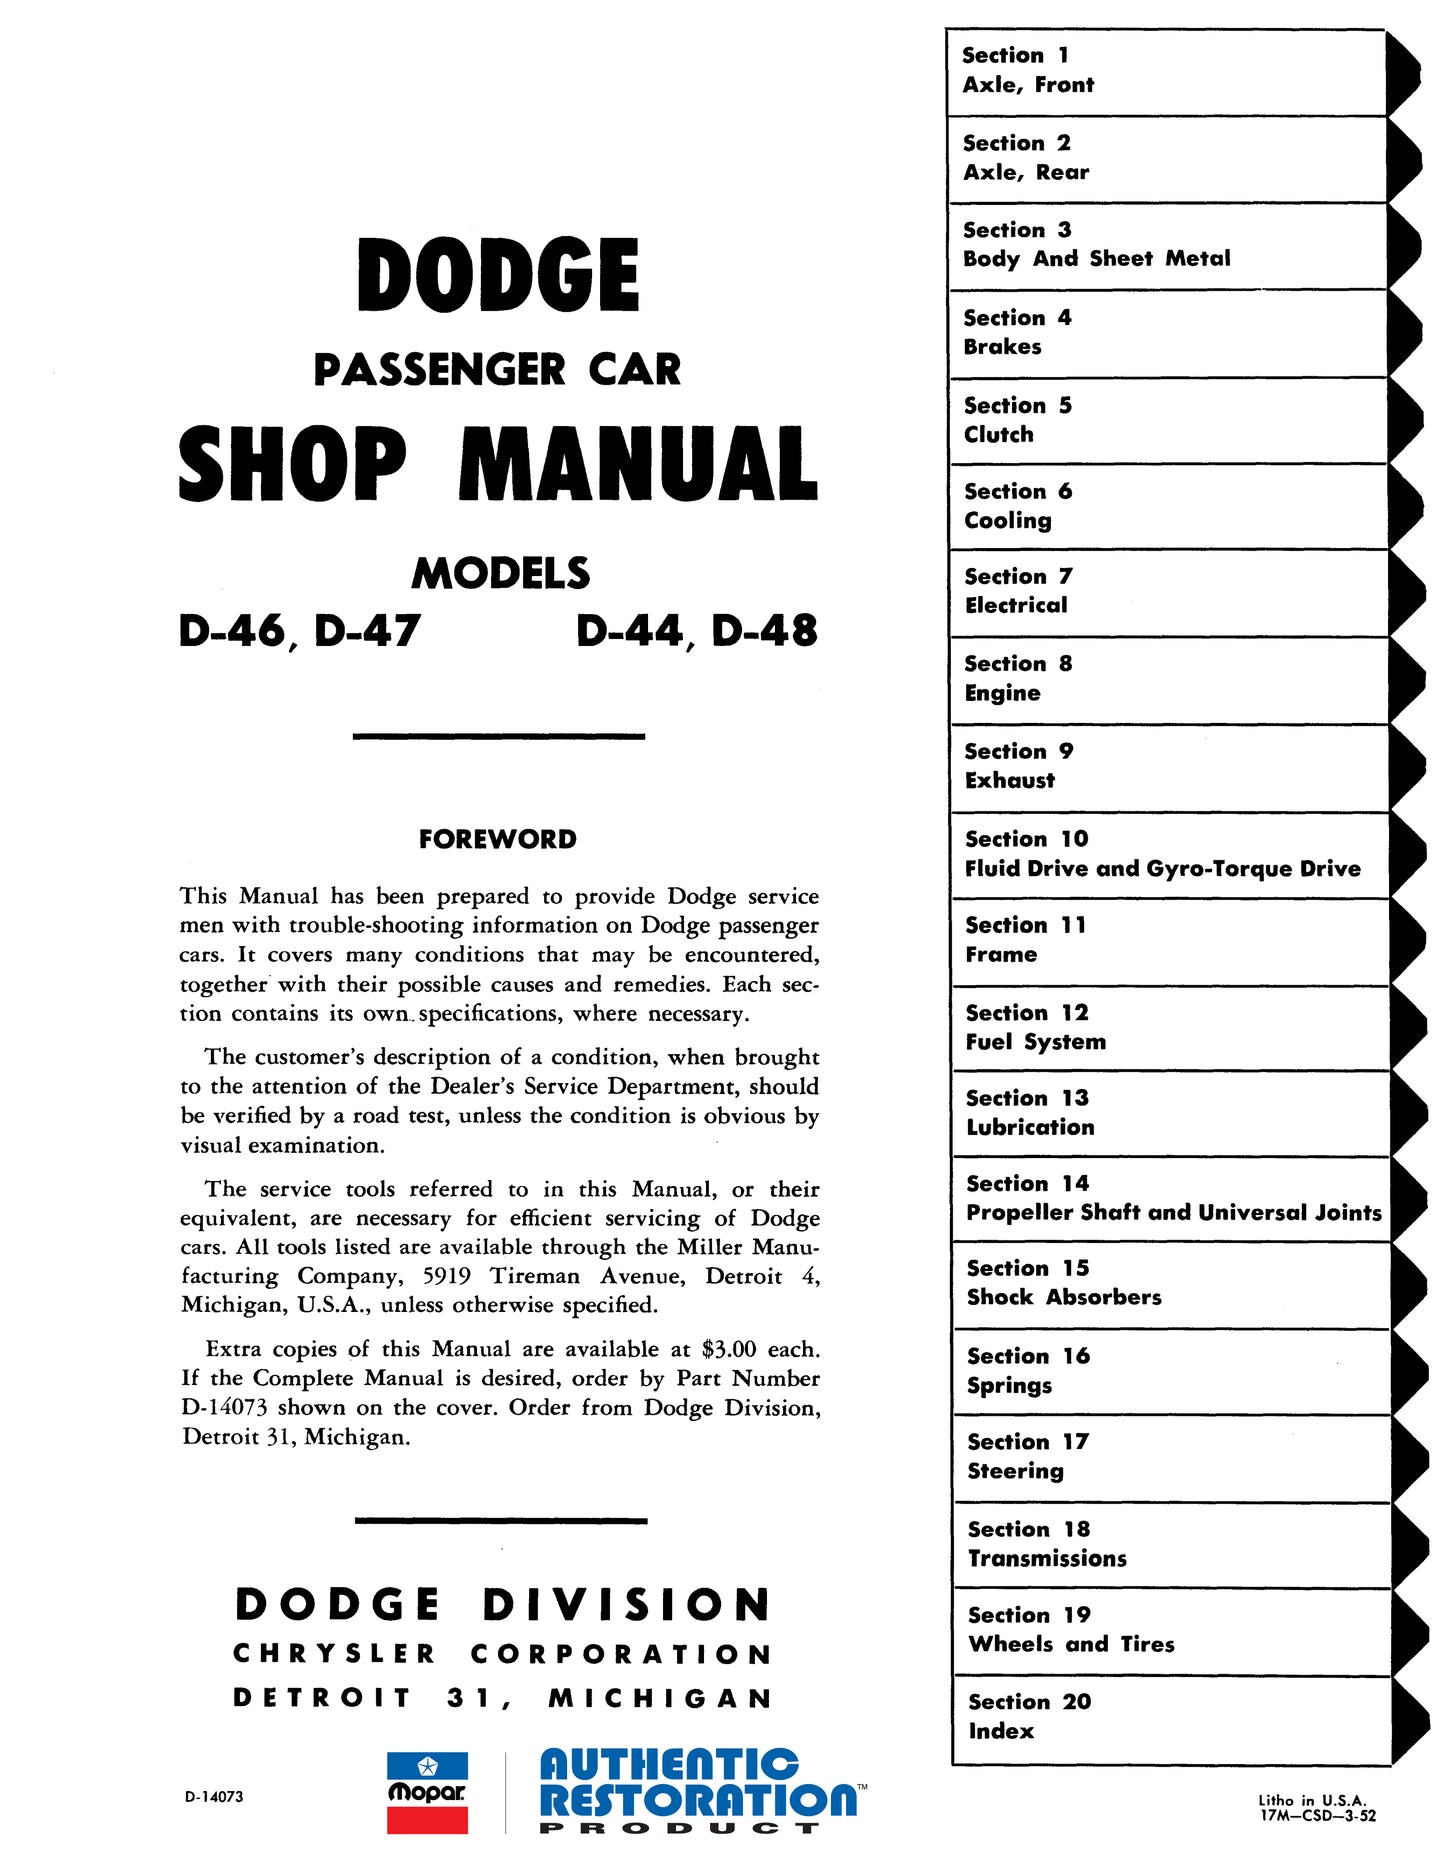 1953 Dodge Service Manual - All Models